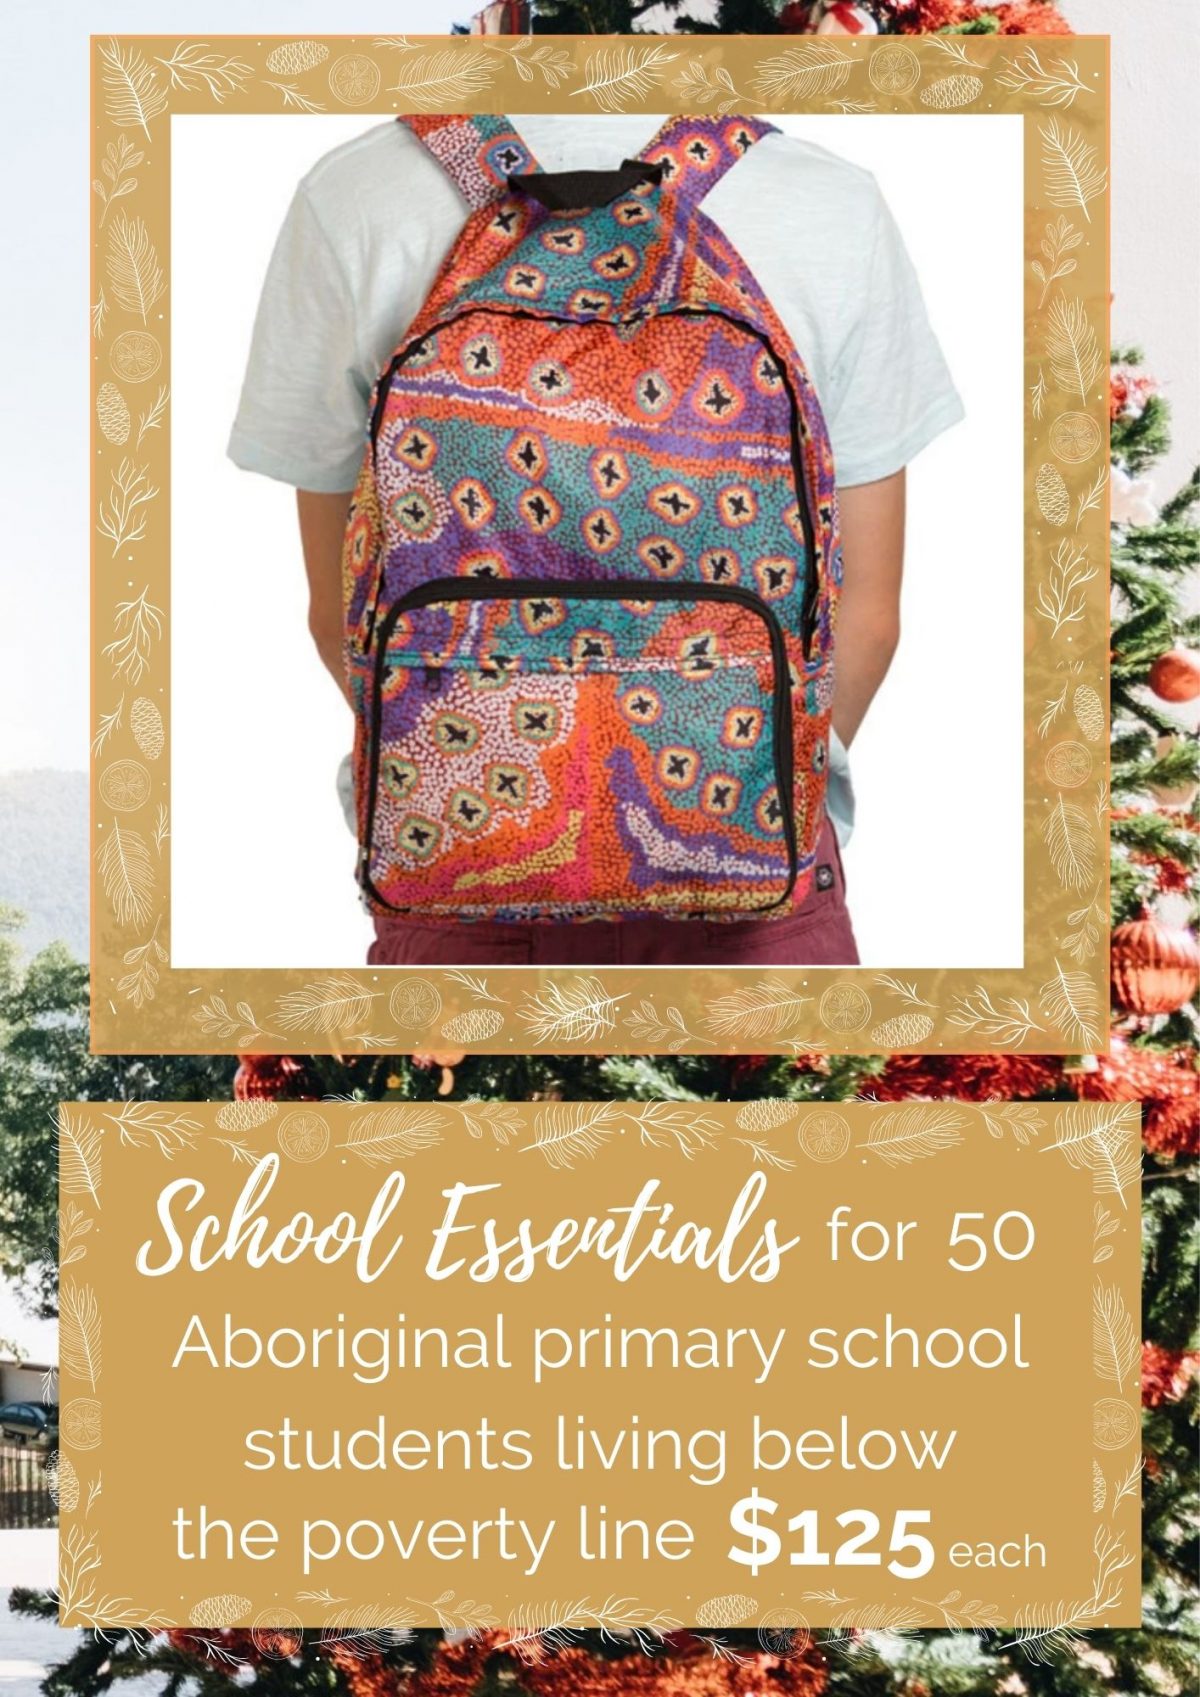 School Essentials for 50 Aboriginal primary school students living below the poverty line. $120 each